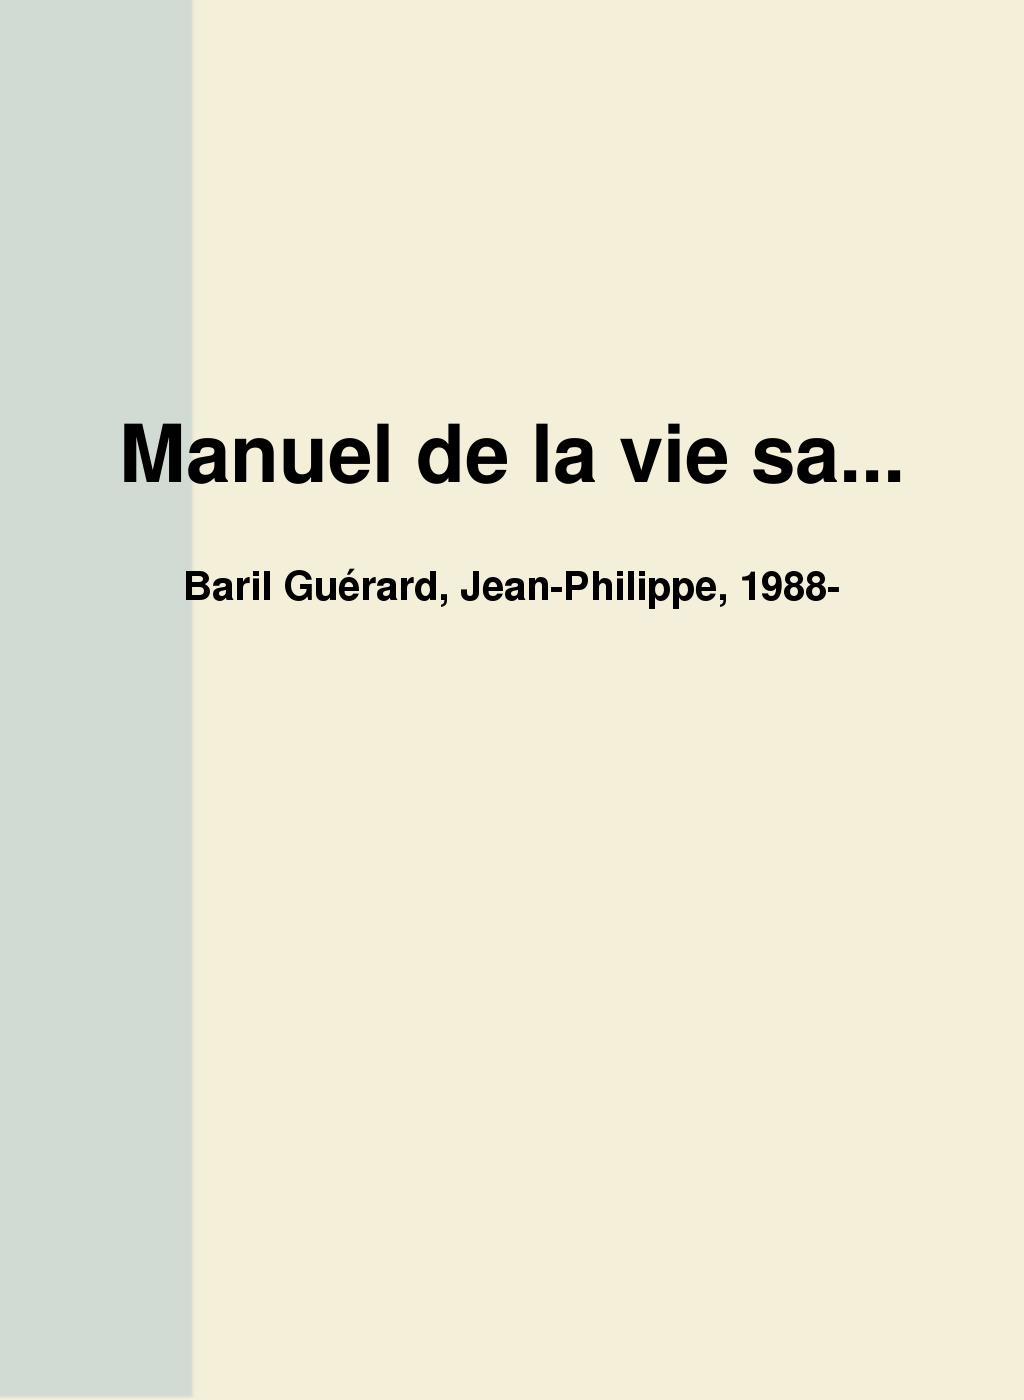 Manuel de la vie sauvage : roman / Jean-Philippe Baril Guérard